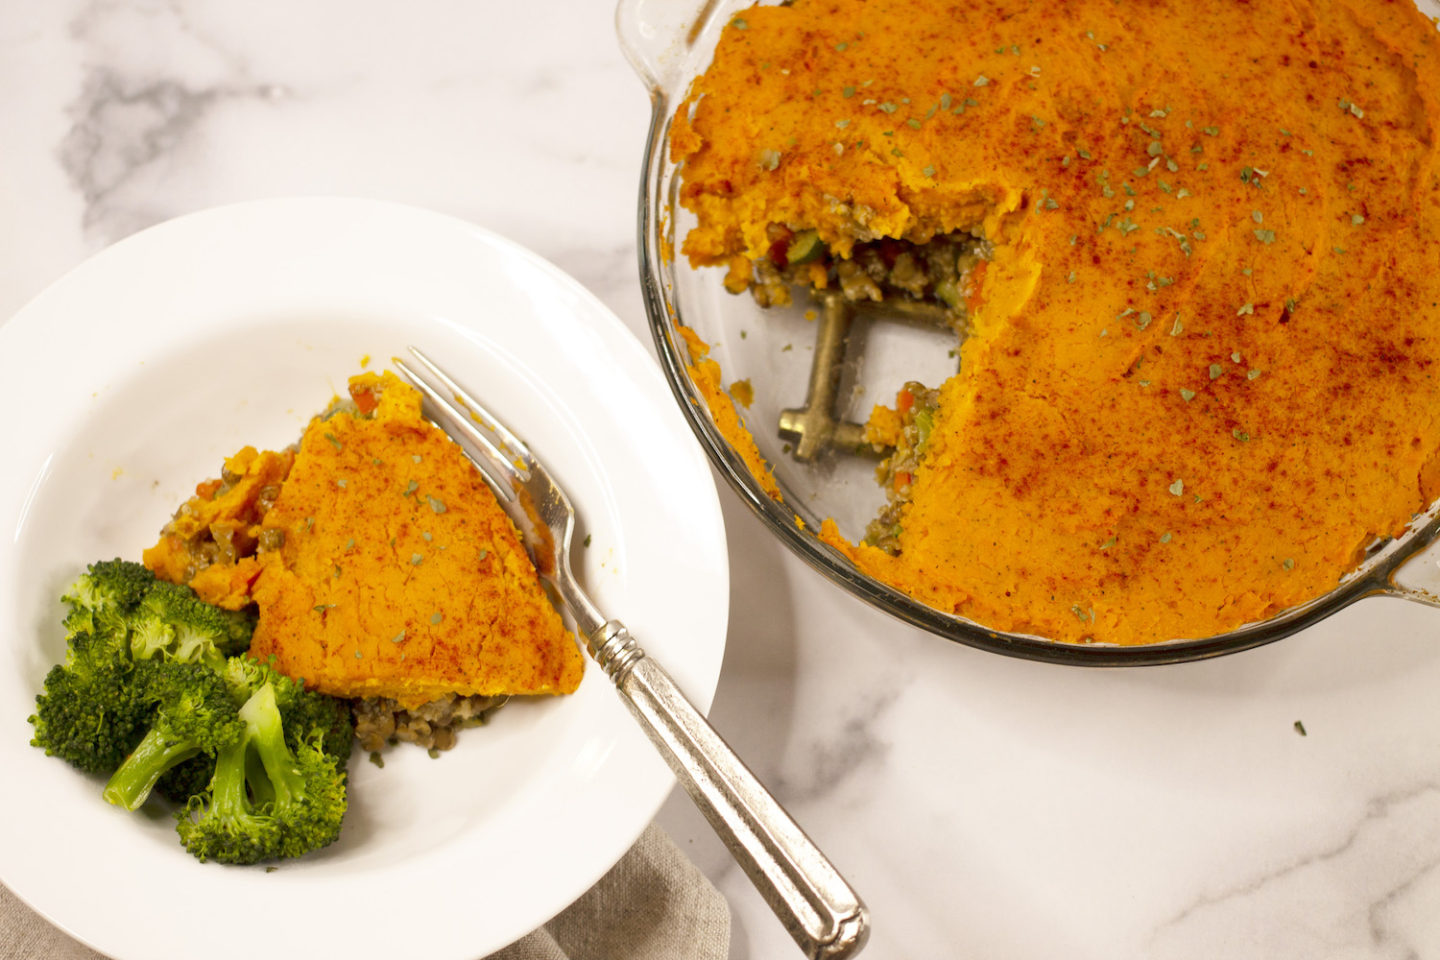 Vegan Shepherd's Pie with plate and broccoli